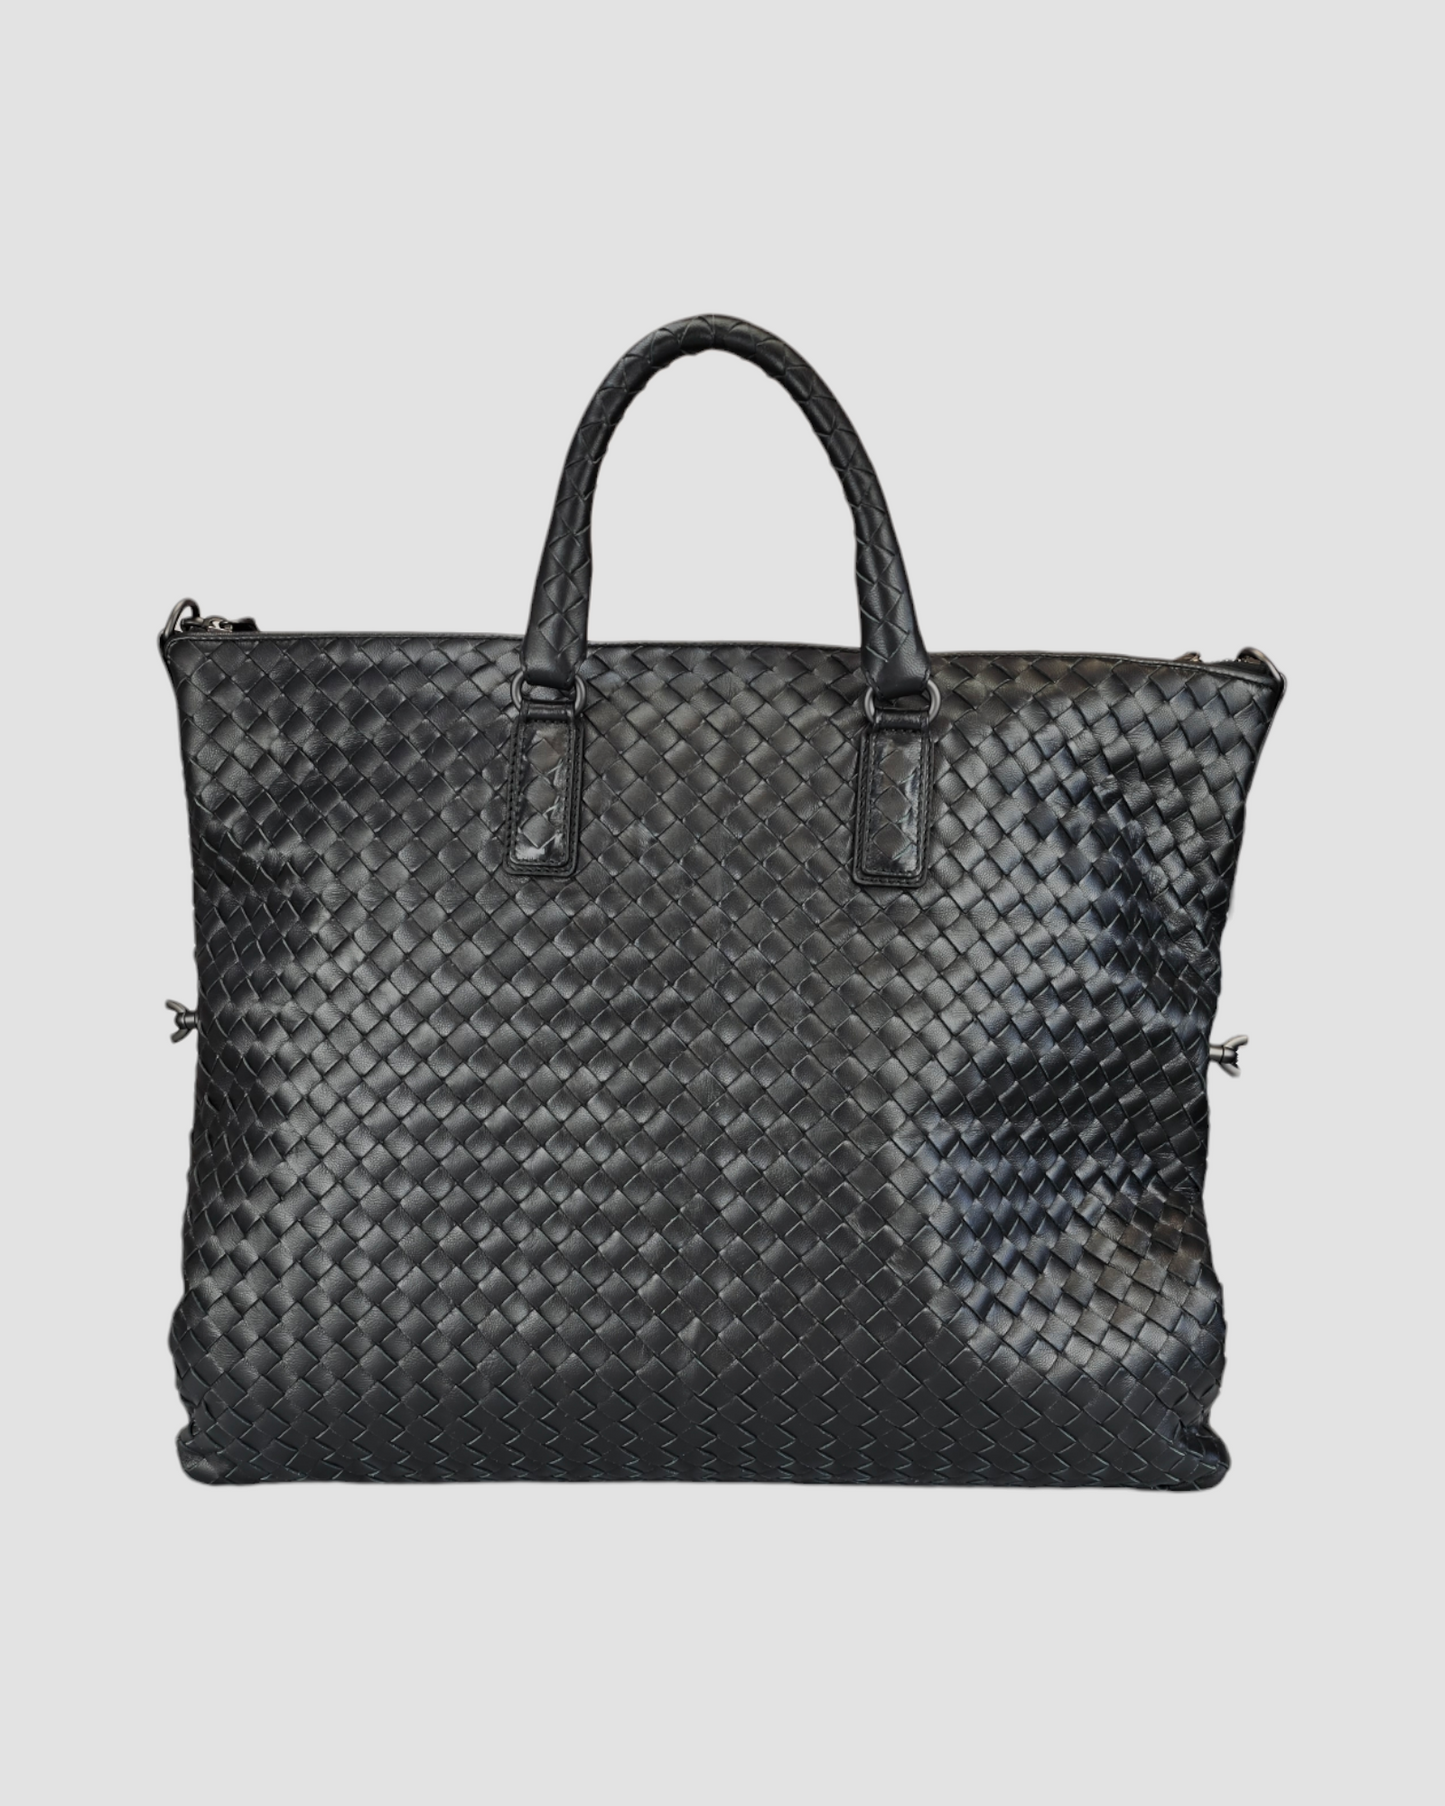 Bottega Veneta Cabat leather handbag